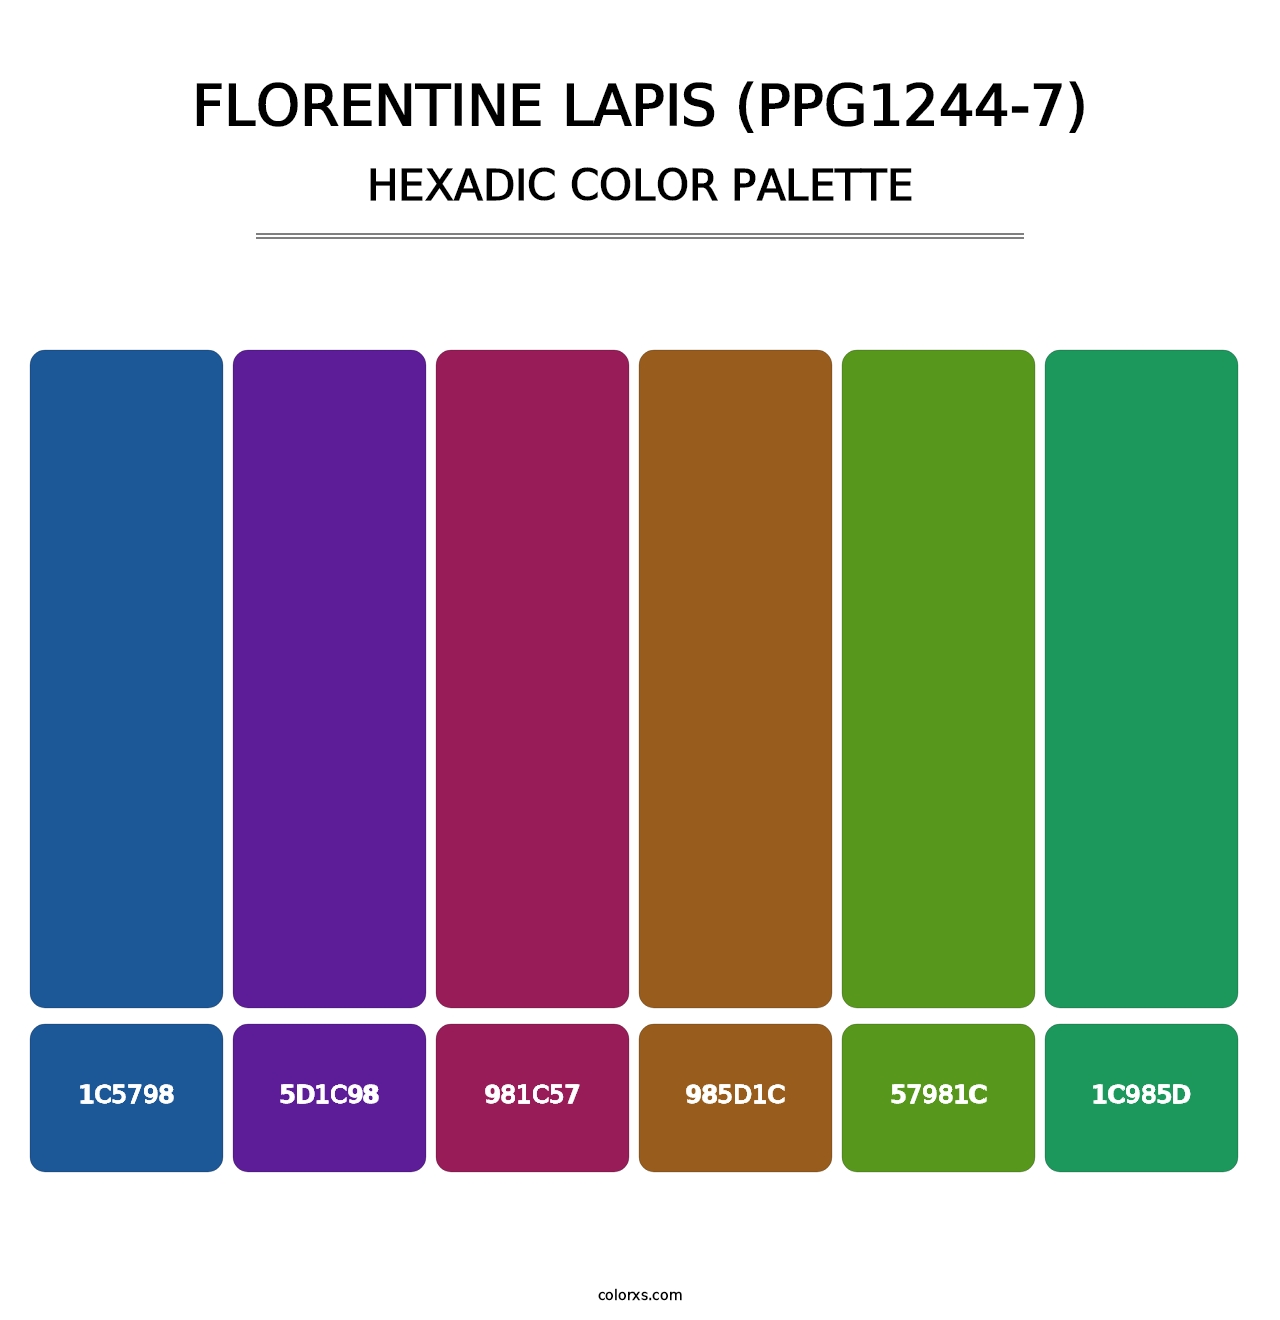 Florentine Lapis (PPG1244-7) - Hexadic Color Palette